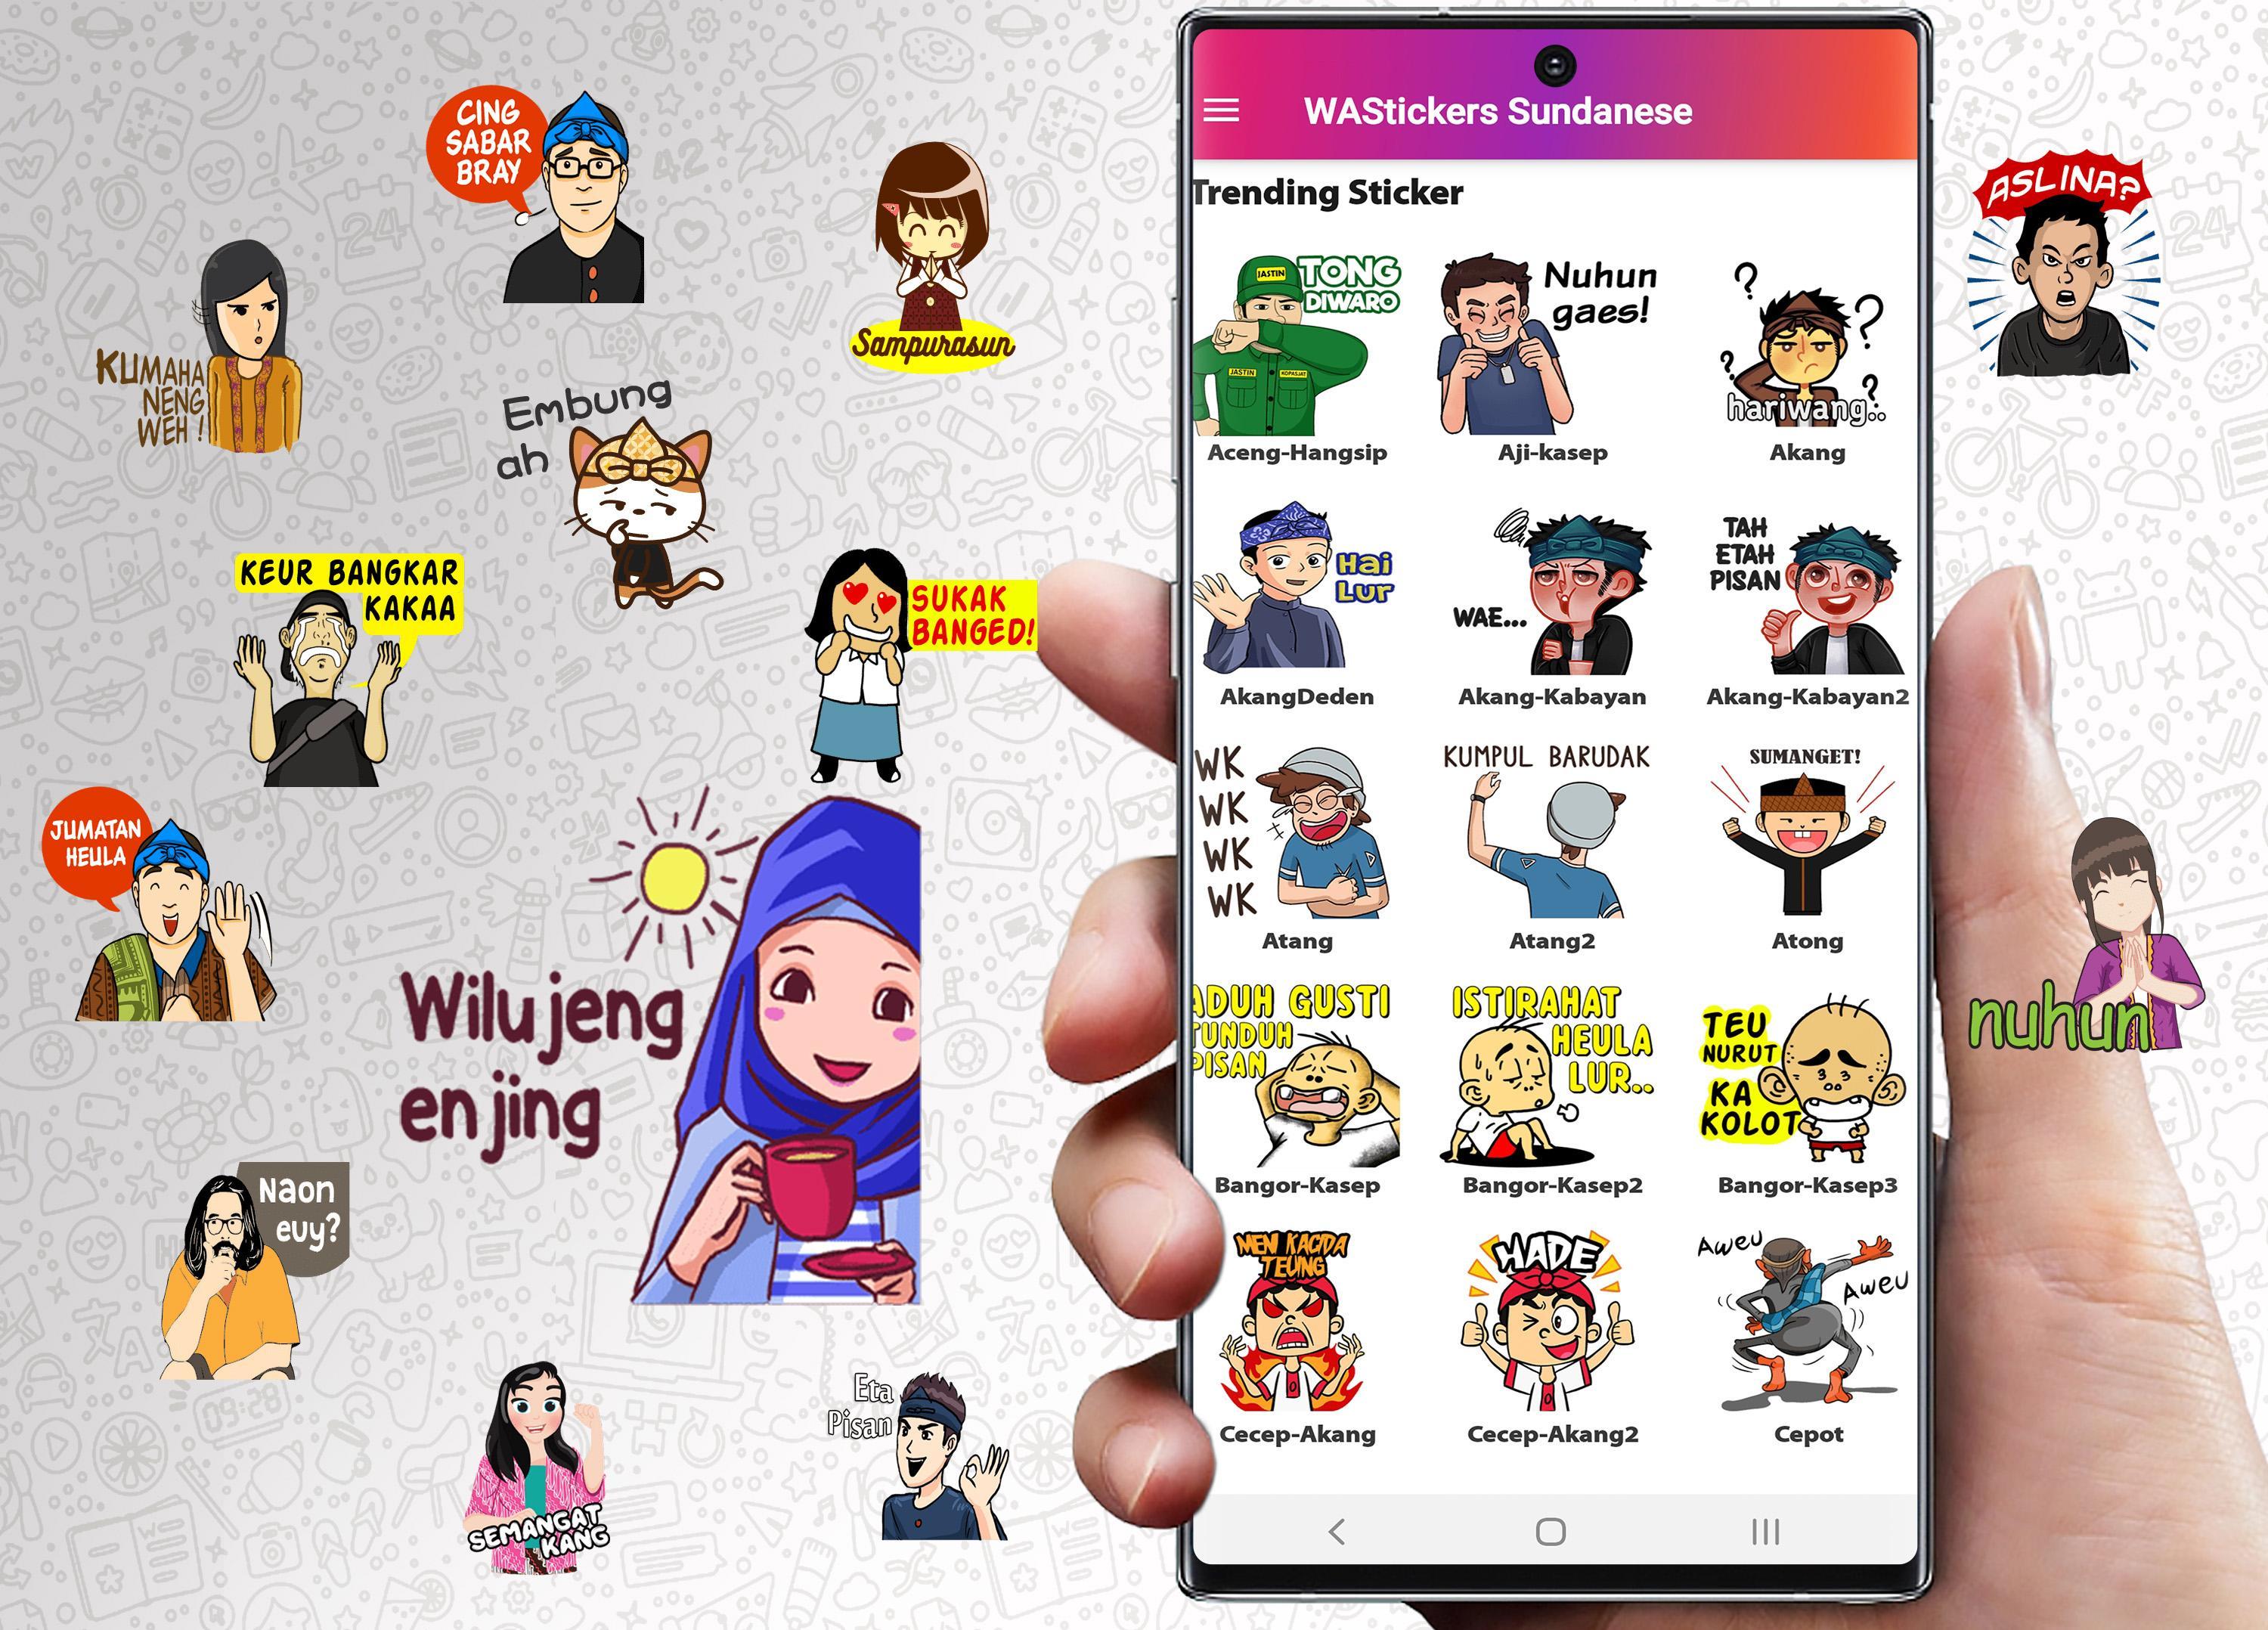 Wastickerapps Sundanese Cute Sticker Sunda Kocak For Android Apk